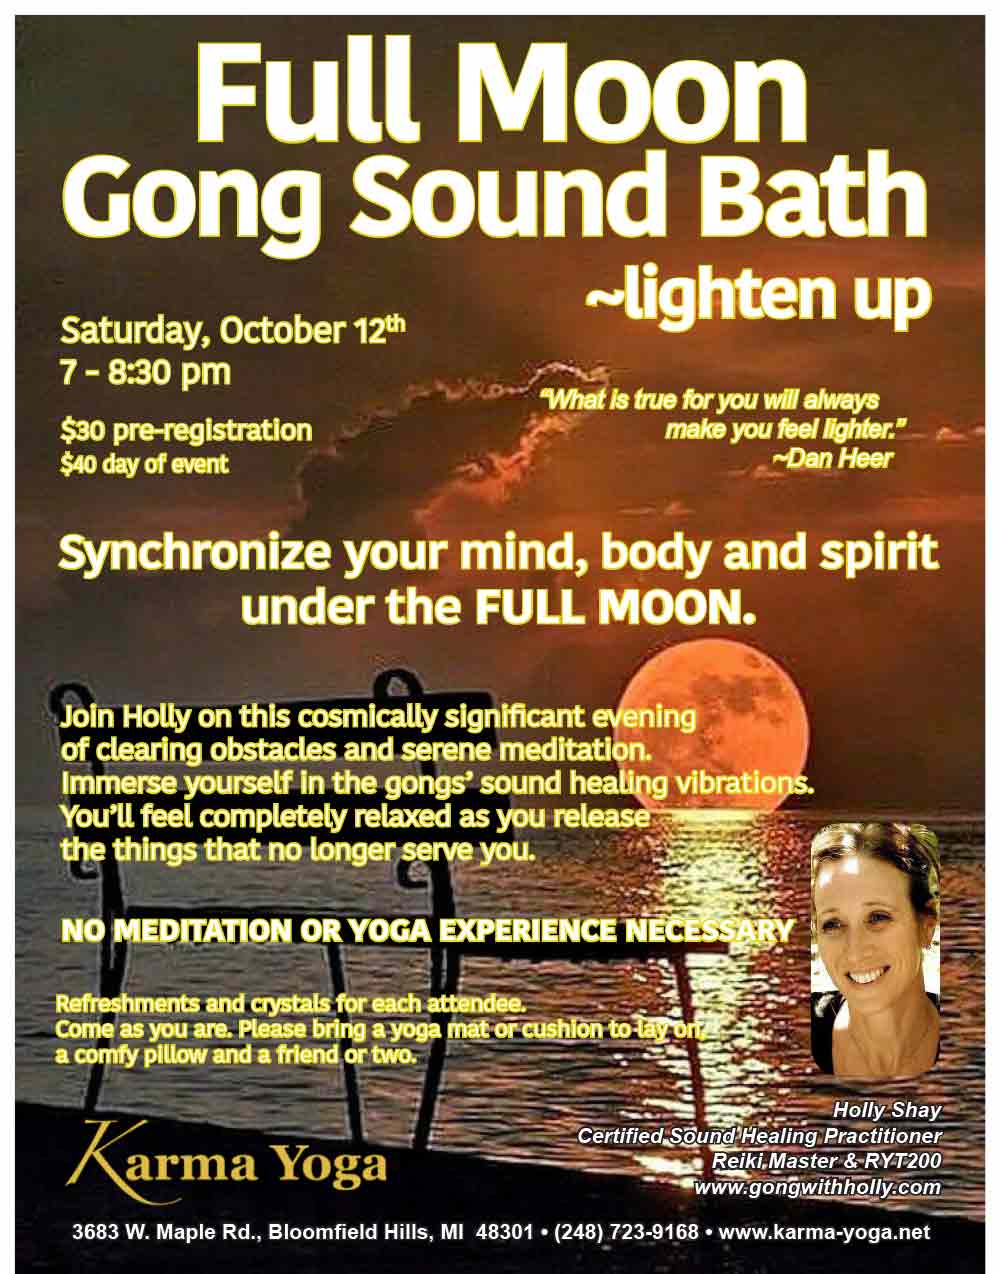 Full Moon Gong Sound Bath